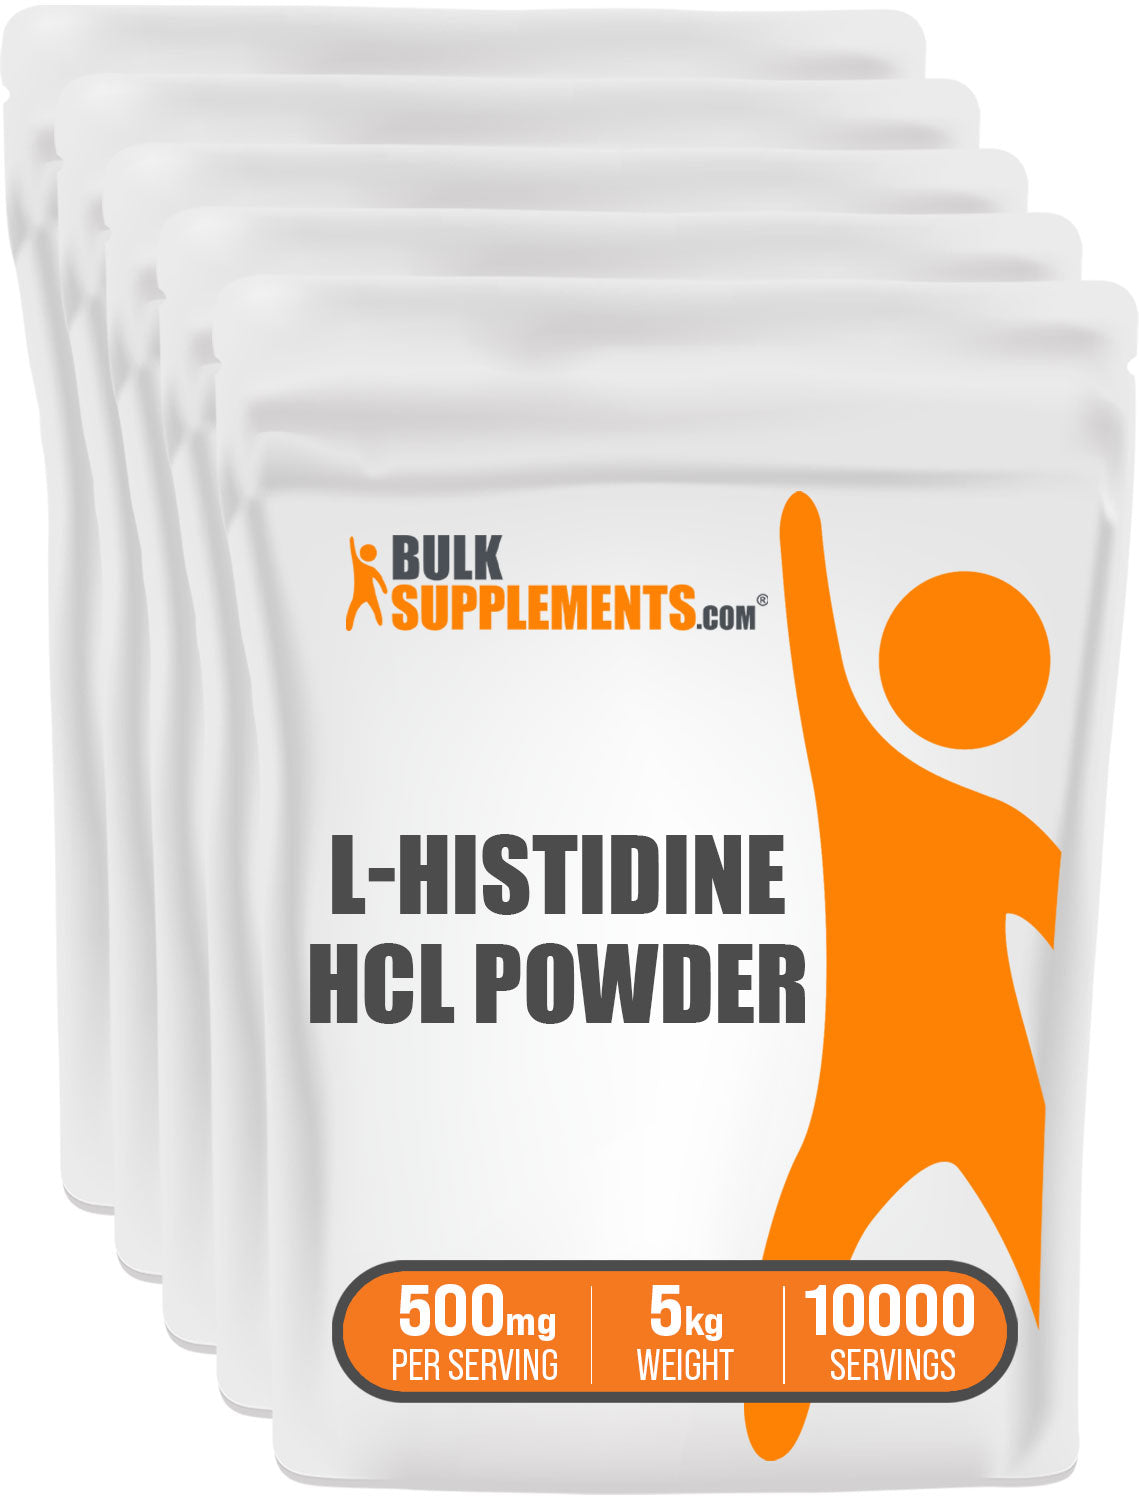 Histidine HCl Powder 5kg